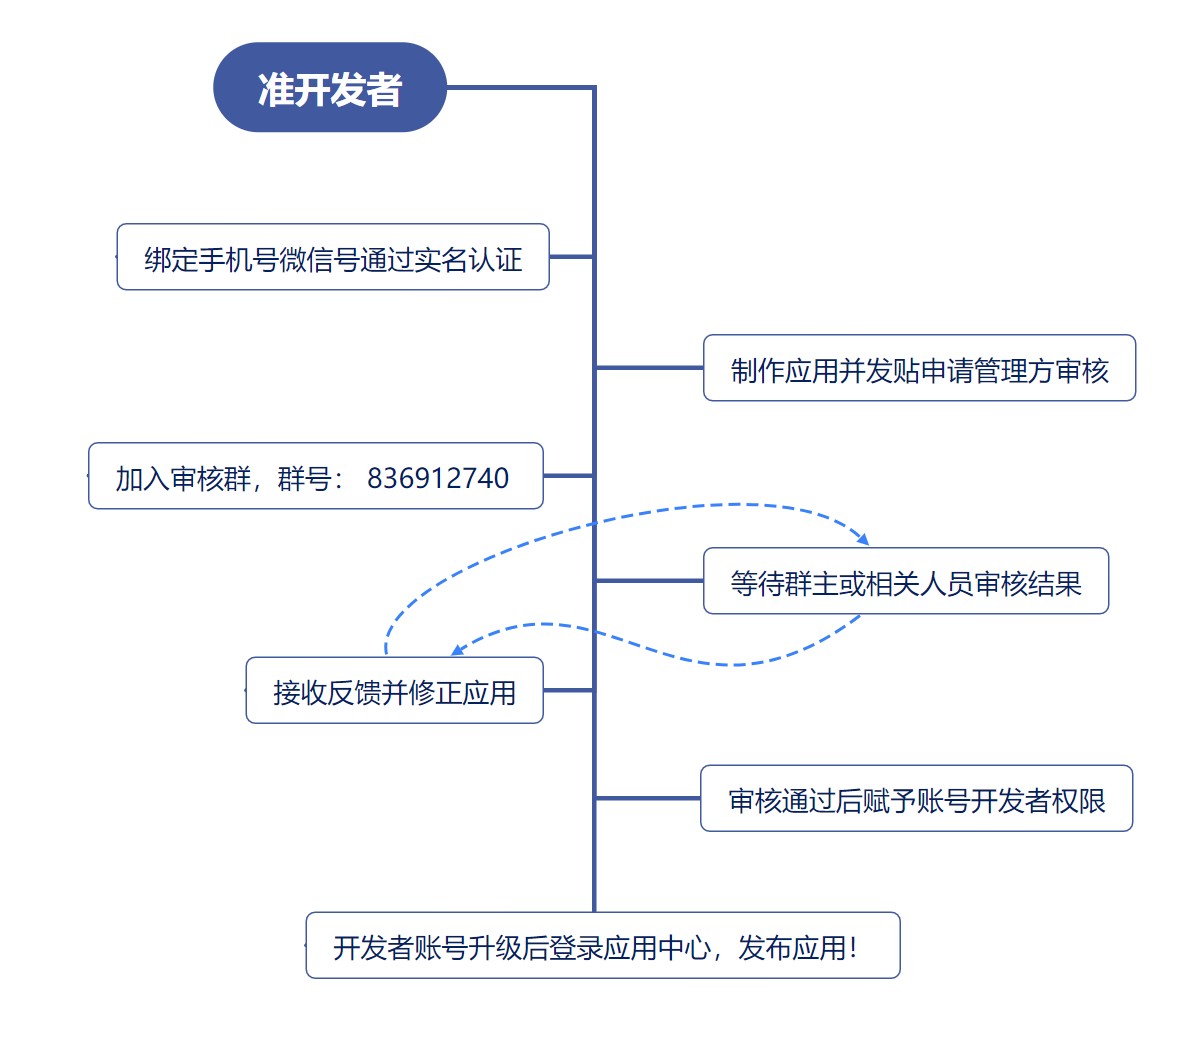  Flow chart of ALT developer application